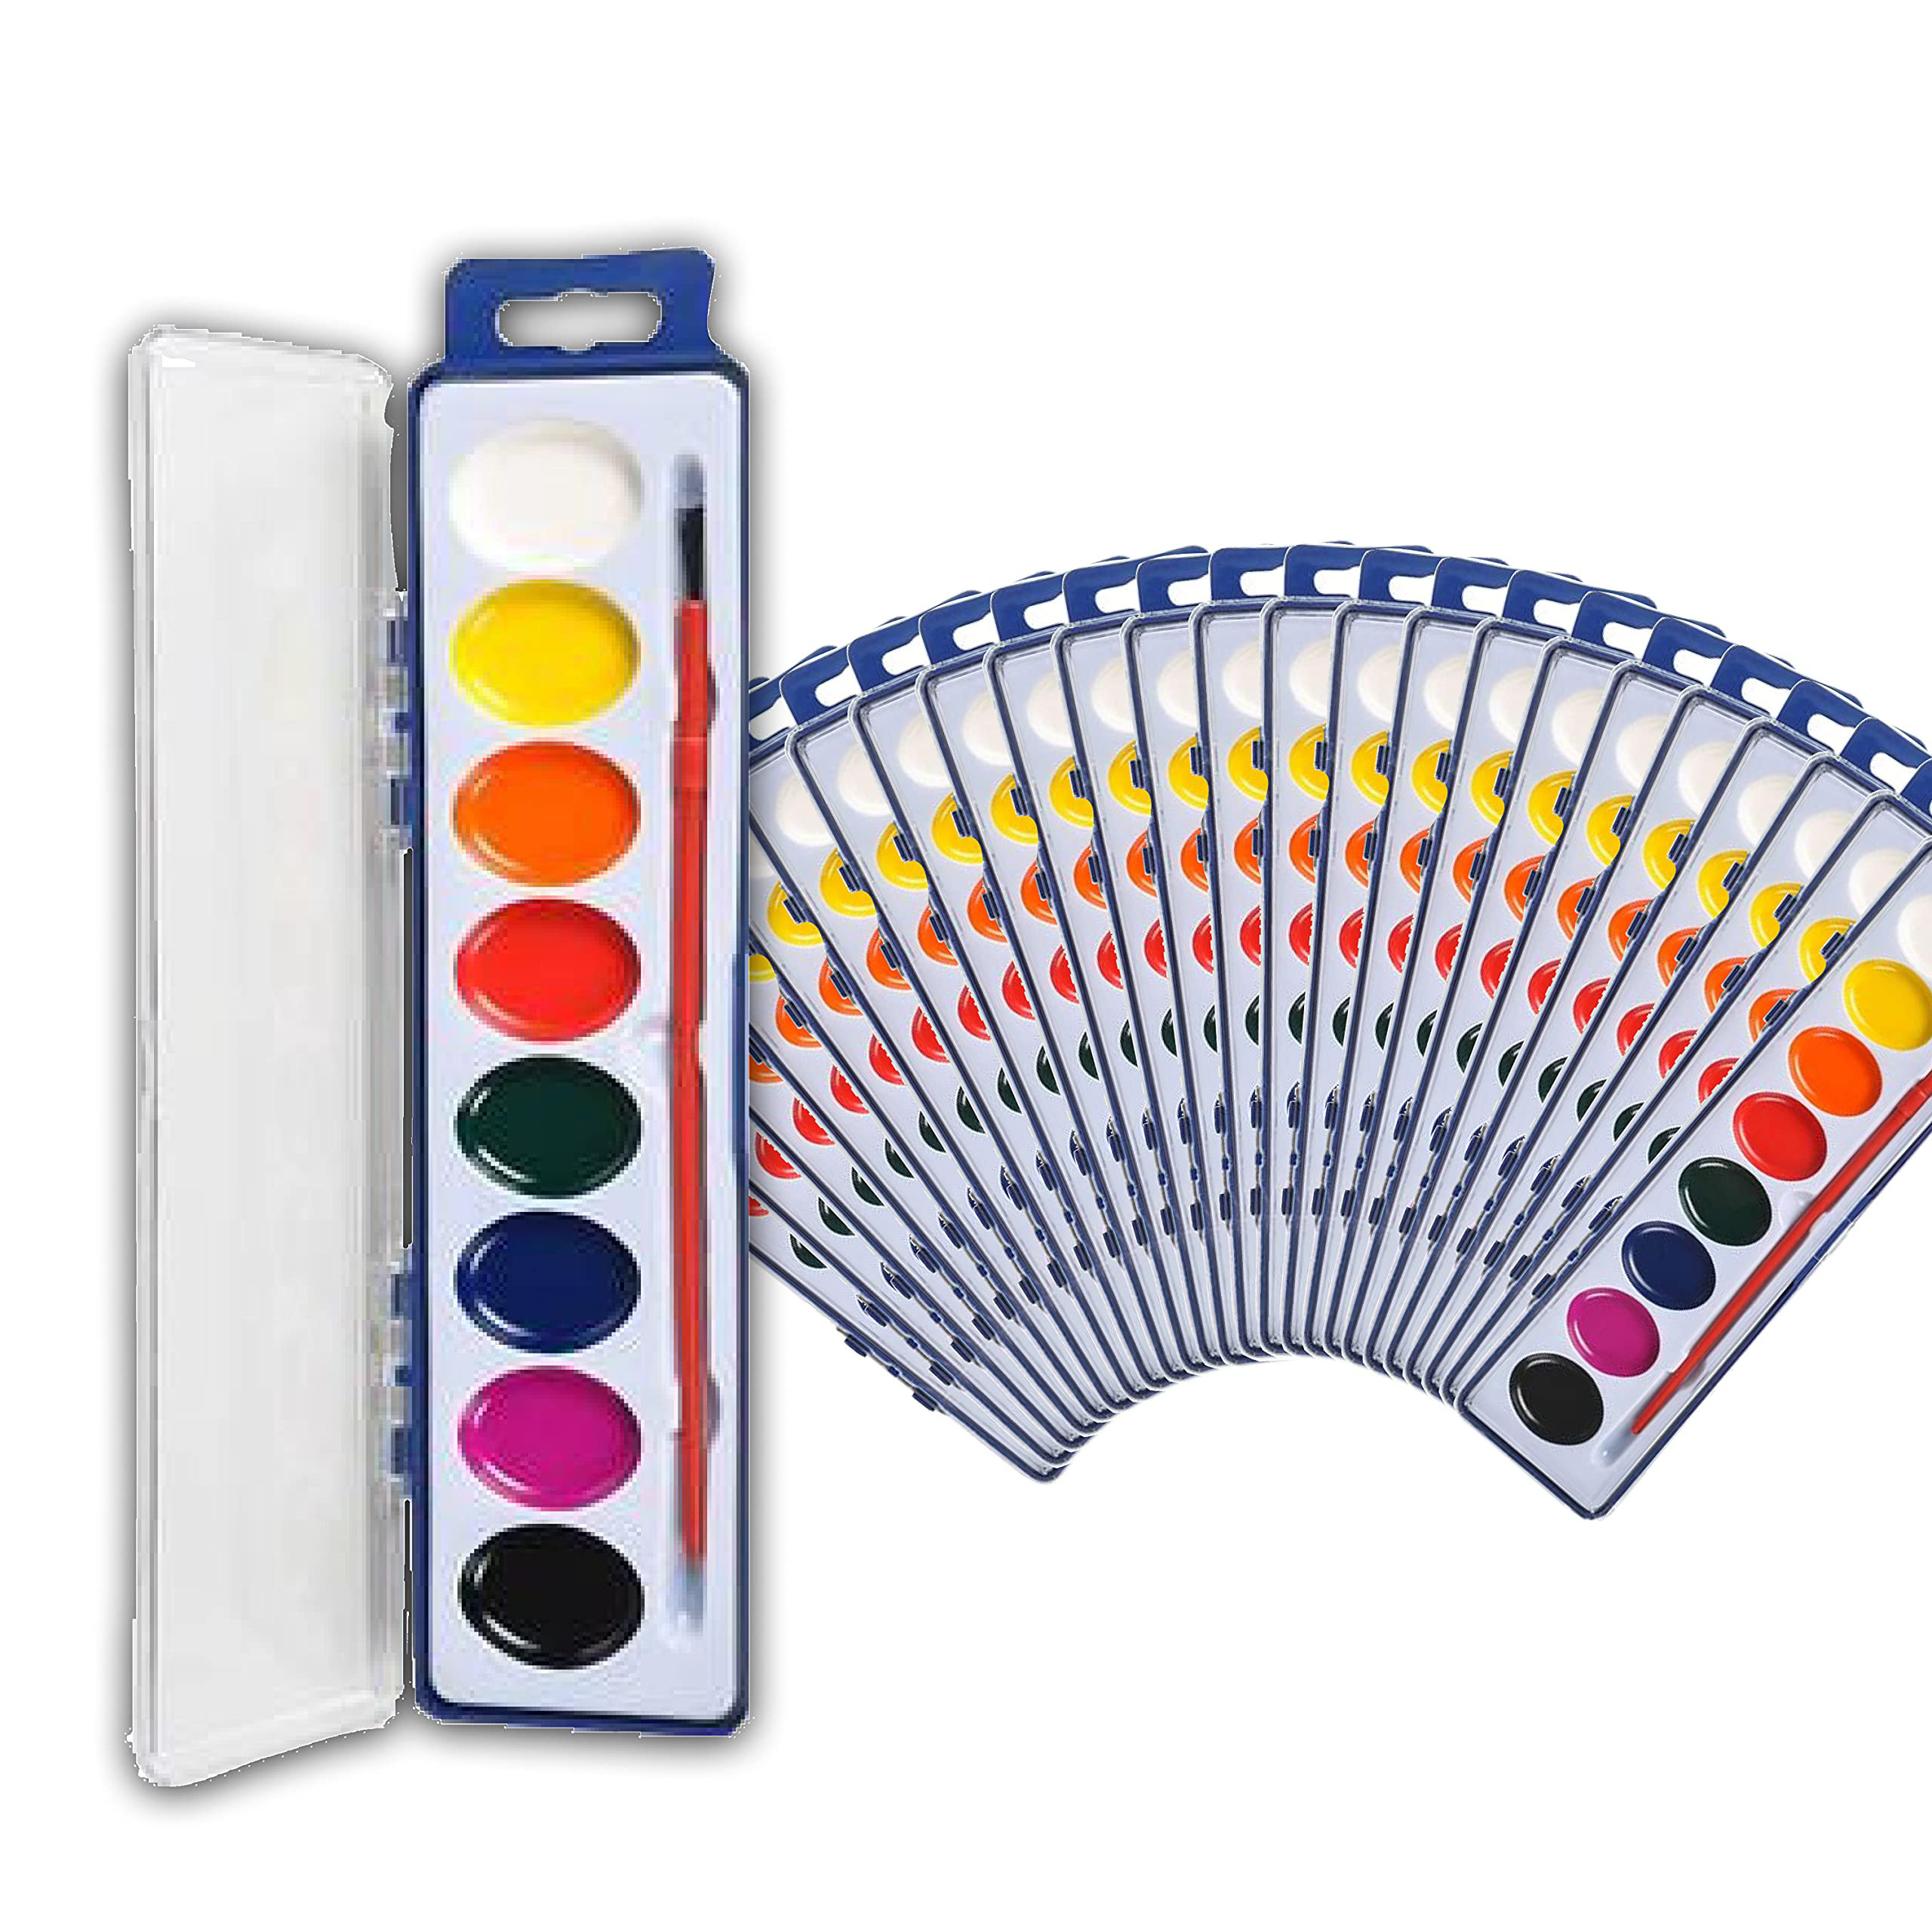 Crayola Washable Watercolor Paint Set, Bulk Art Supplies, Case of